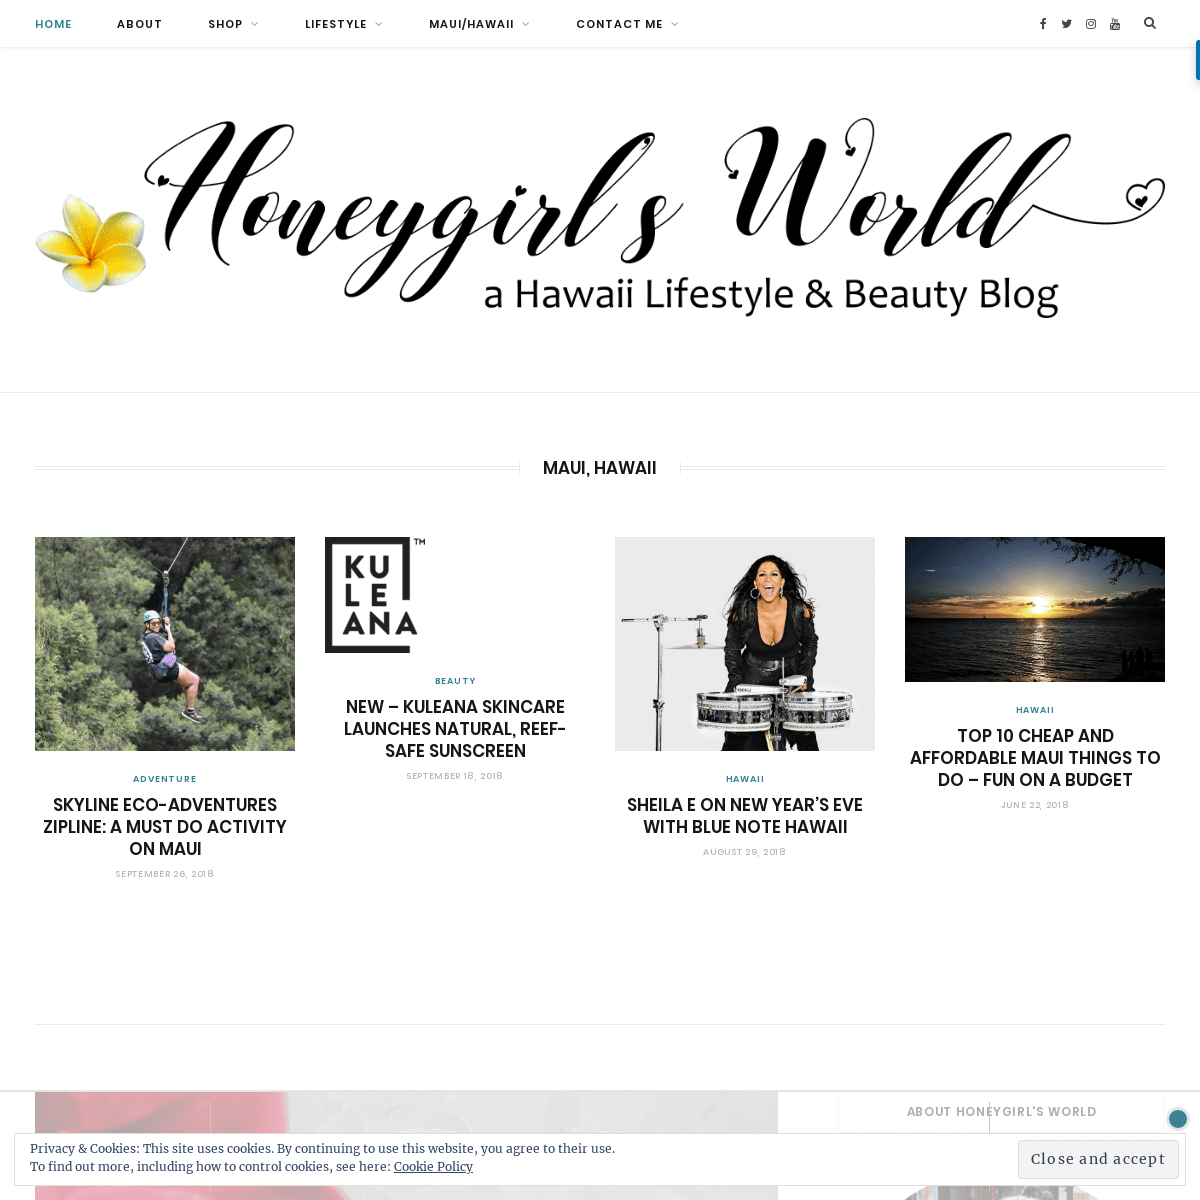 Honeygirl's World - A Hawaii Lifestyle Blog - Honeygirlsworld is a Lifestyle Blog based out of Hawaii.